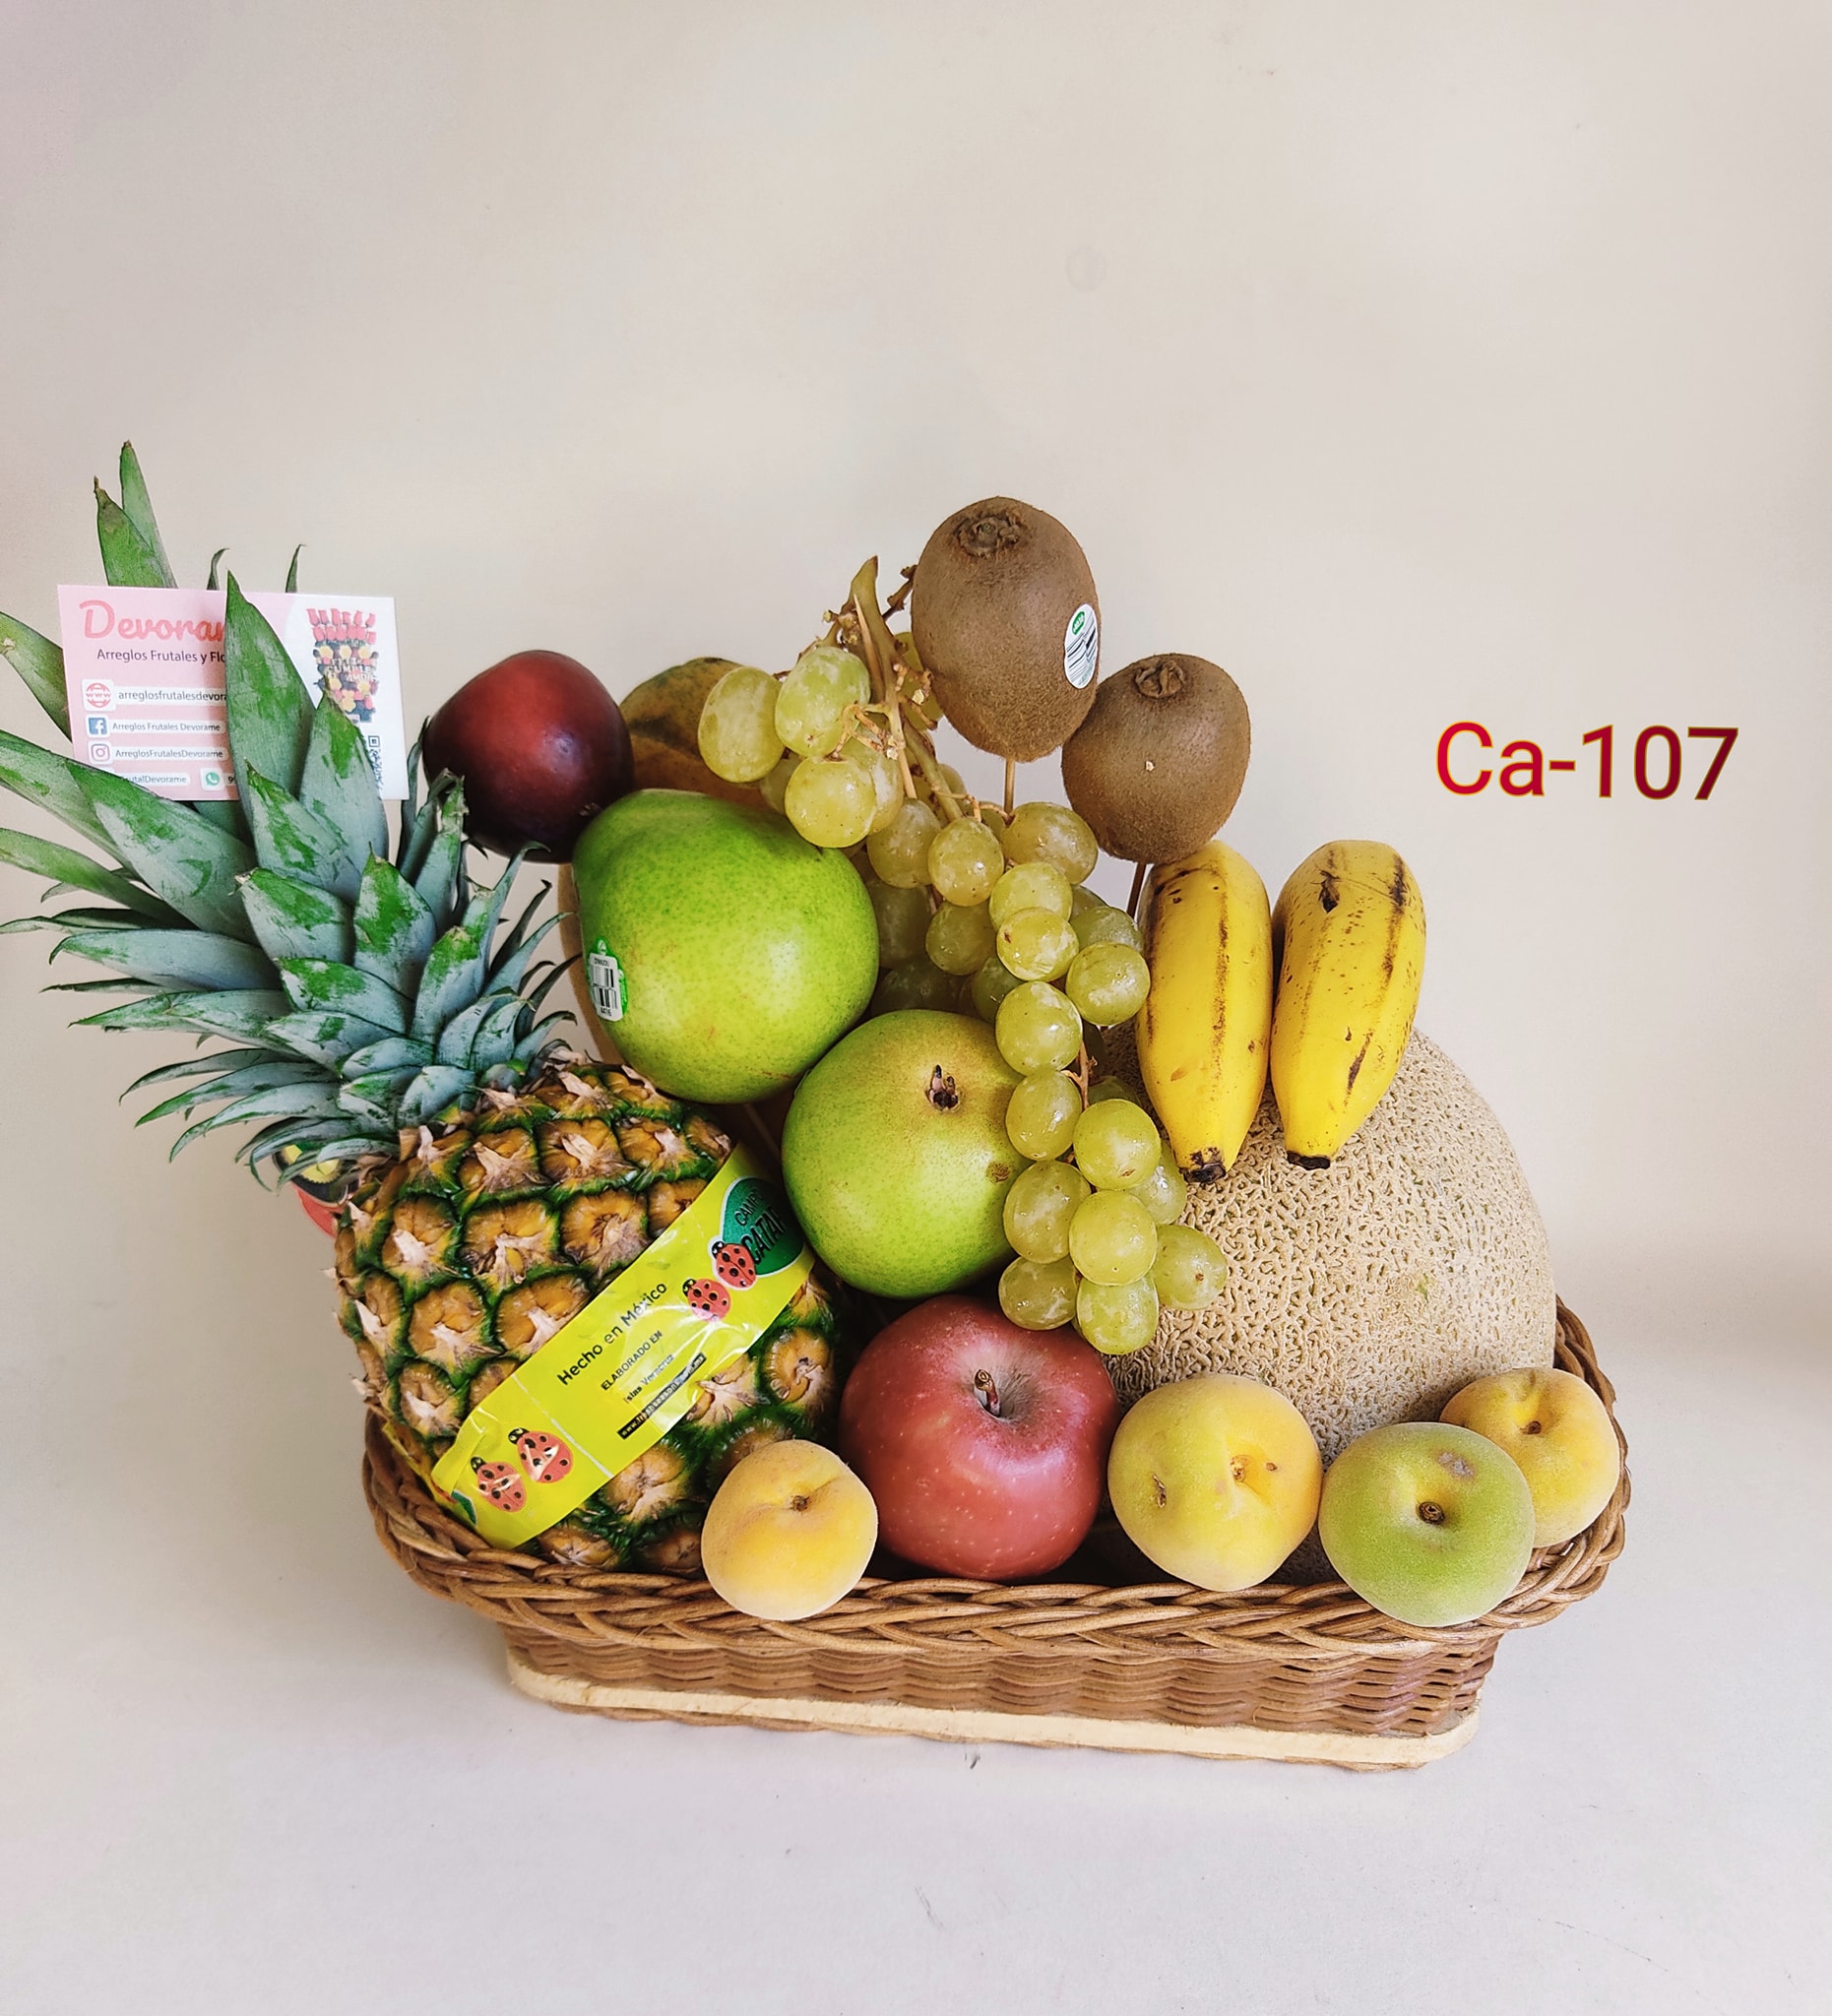 Arreglo frutal Ca-107 devorame